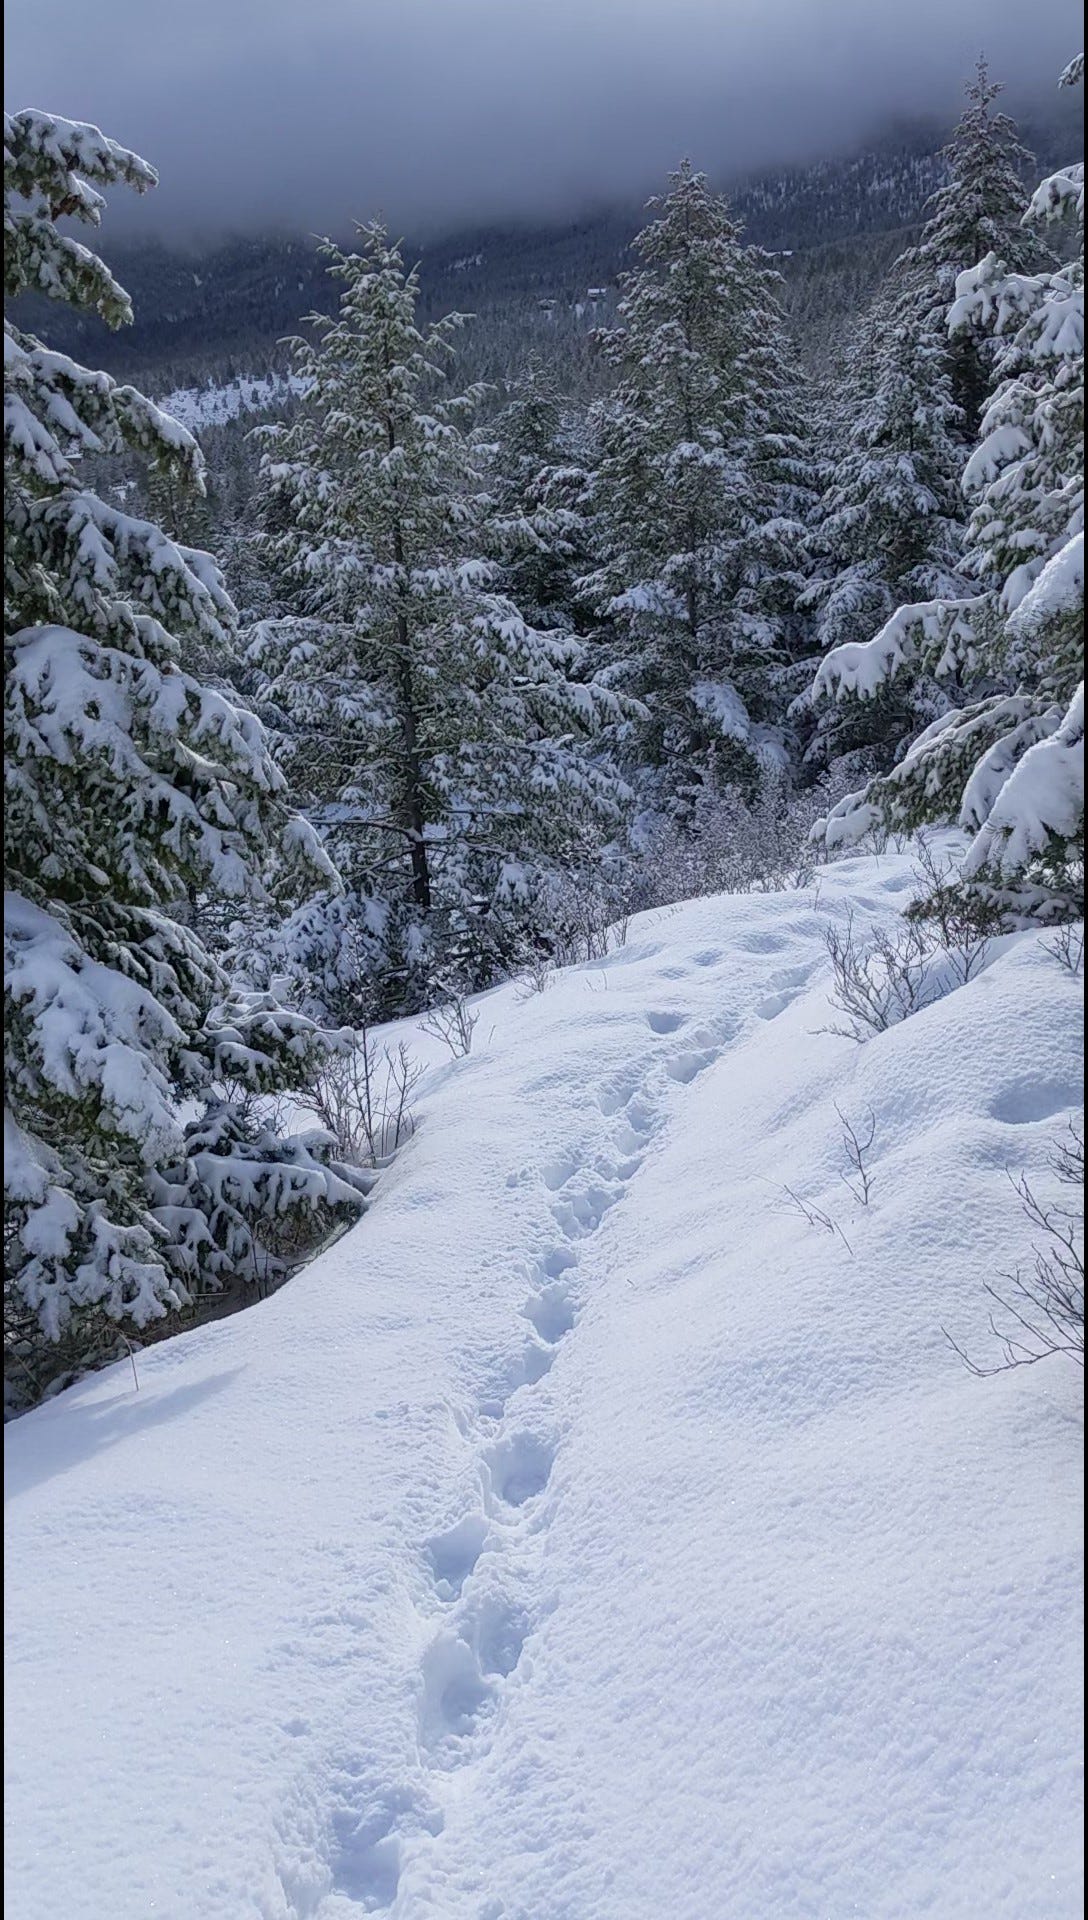 Footprints through snowy woods